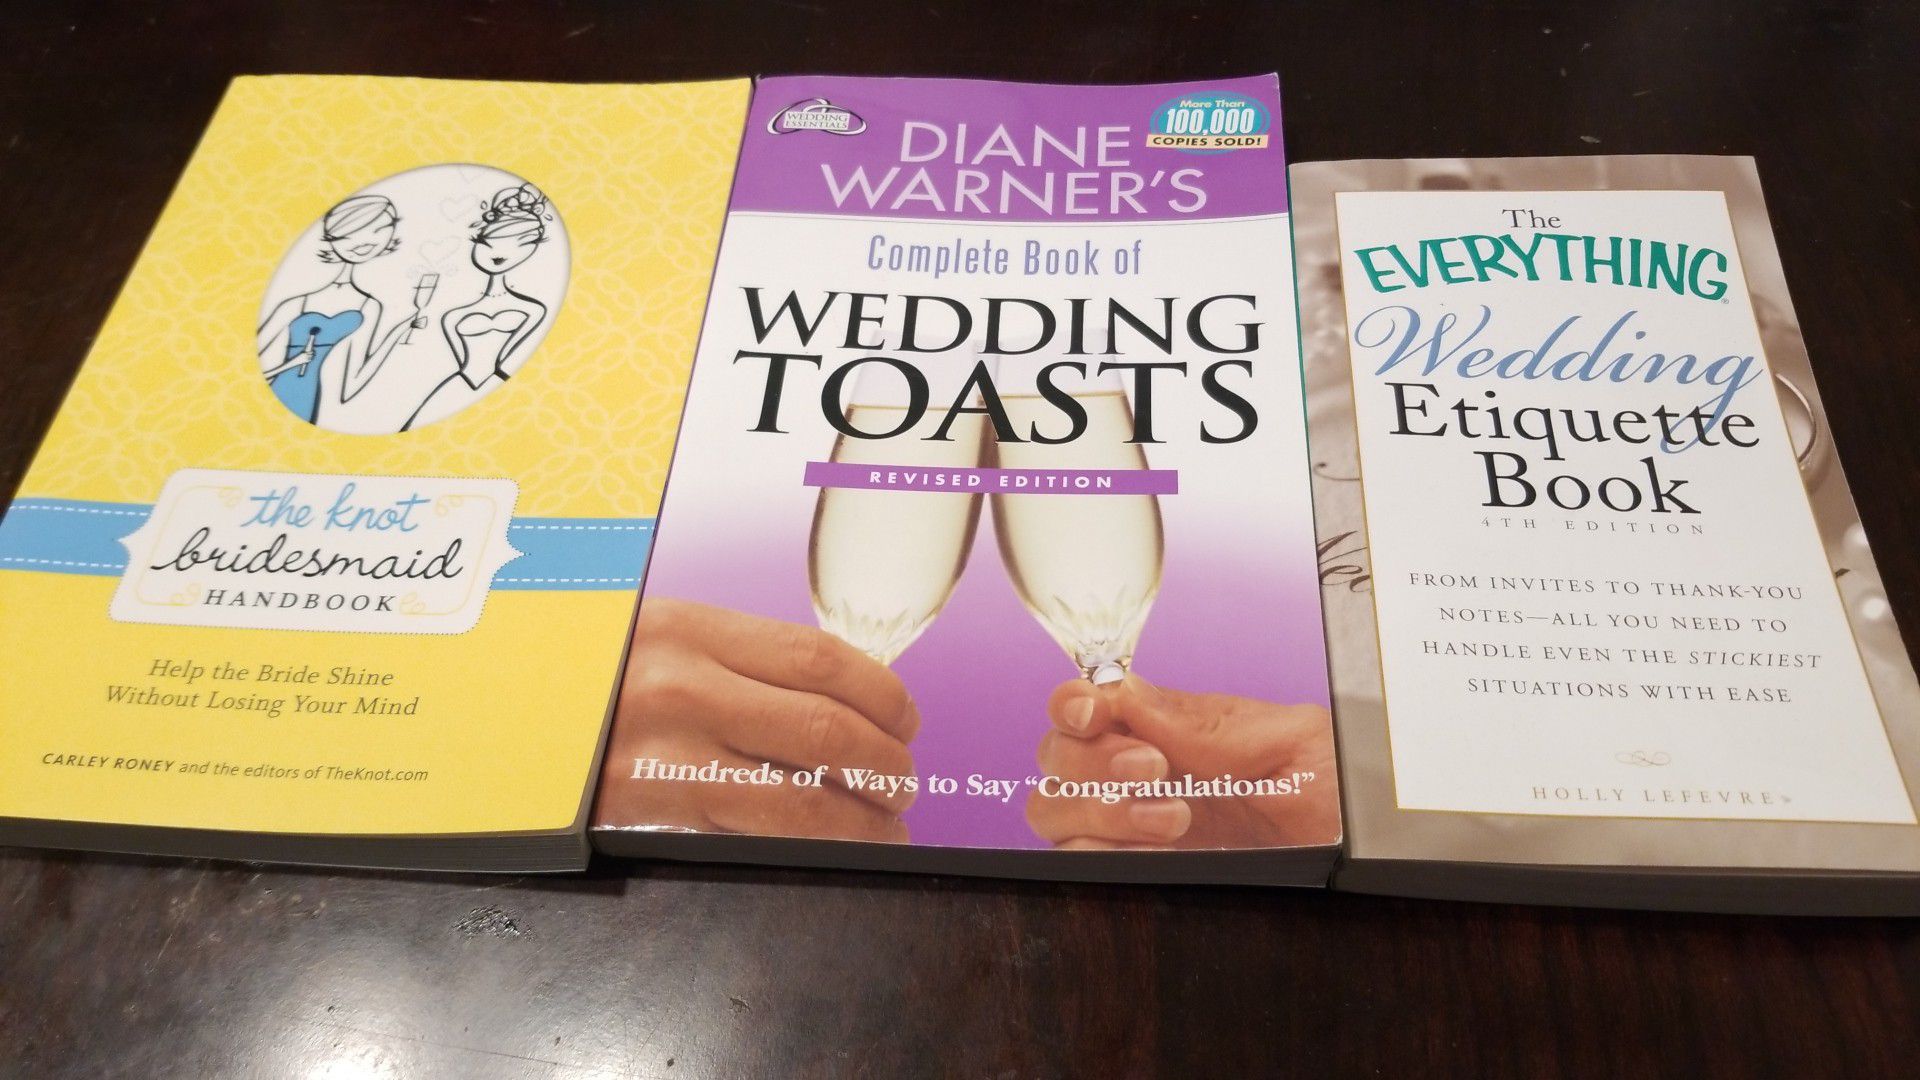 The knot bridesmaid handbook, wedding toast, & everything wedding etiquette book.